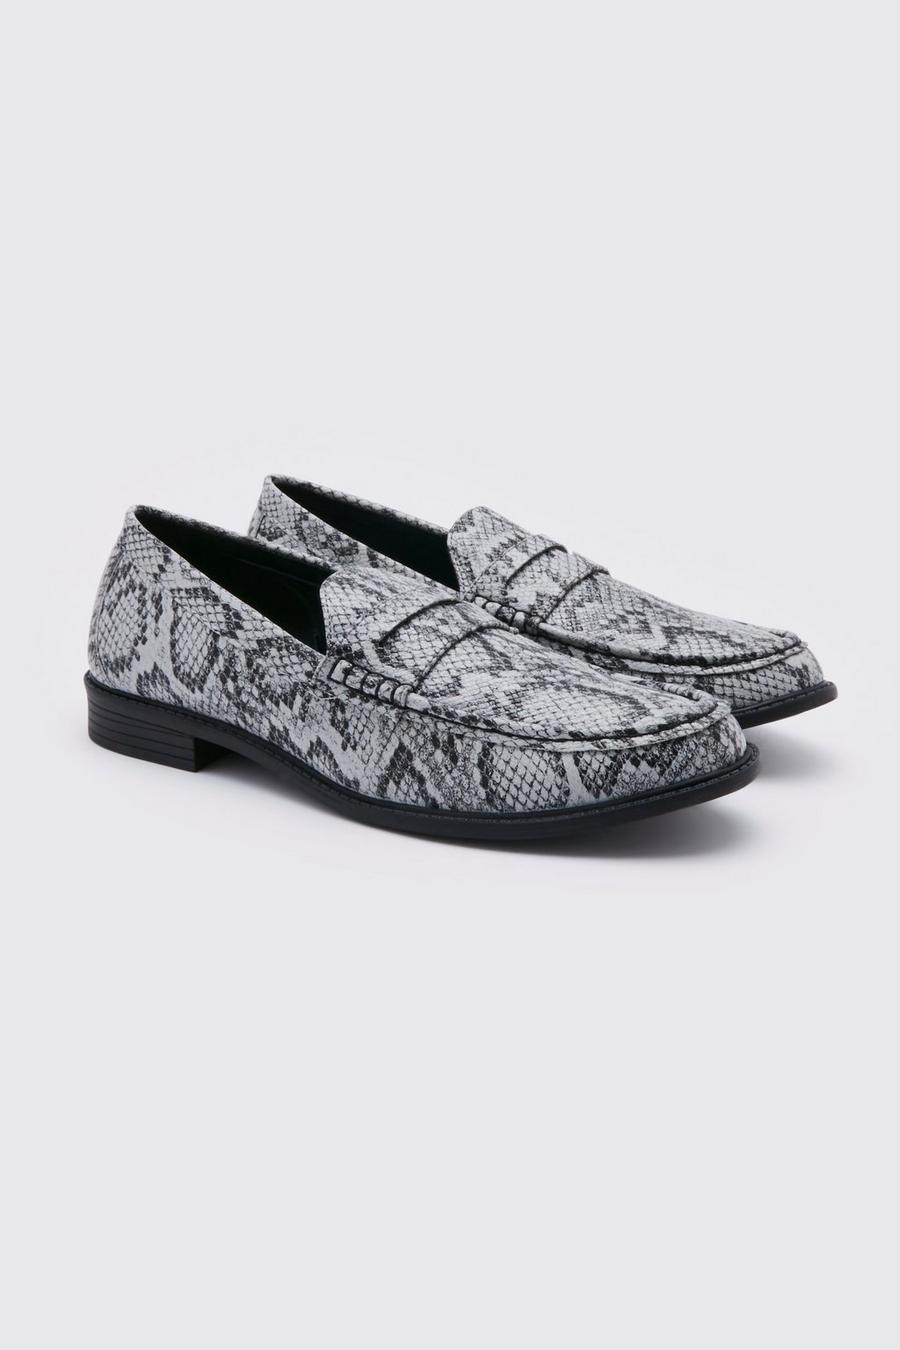 Charcoal gris Snake Print Loafer